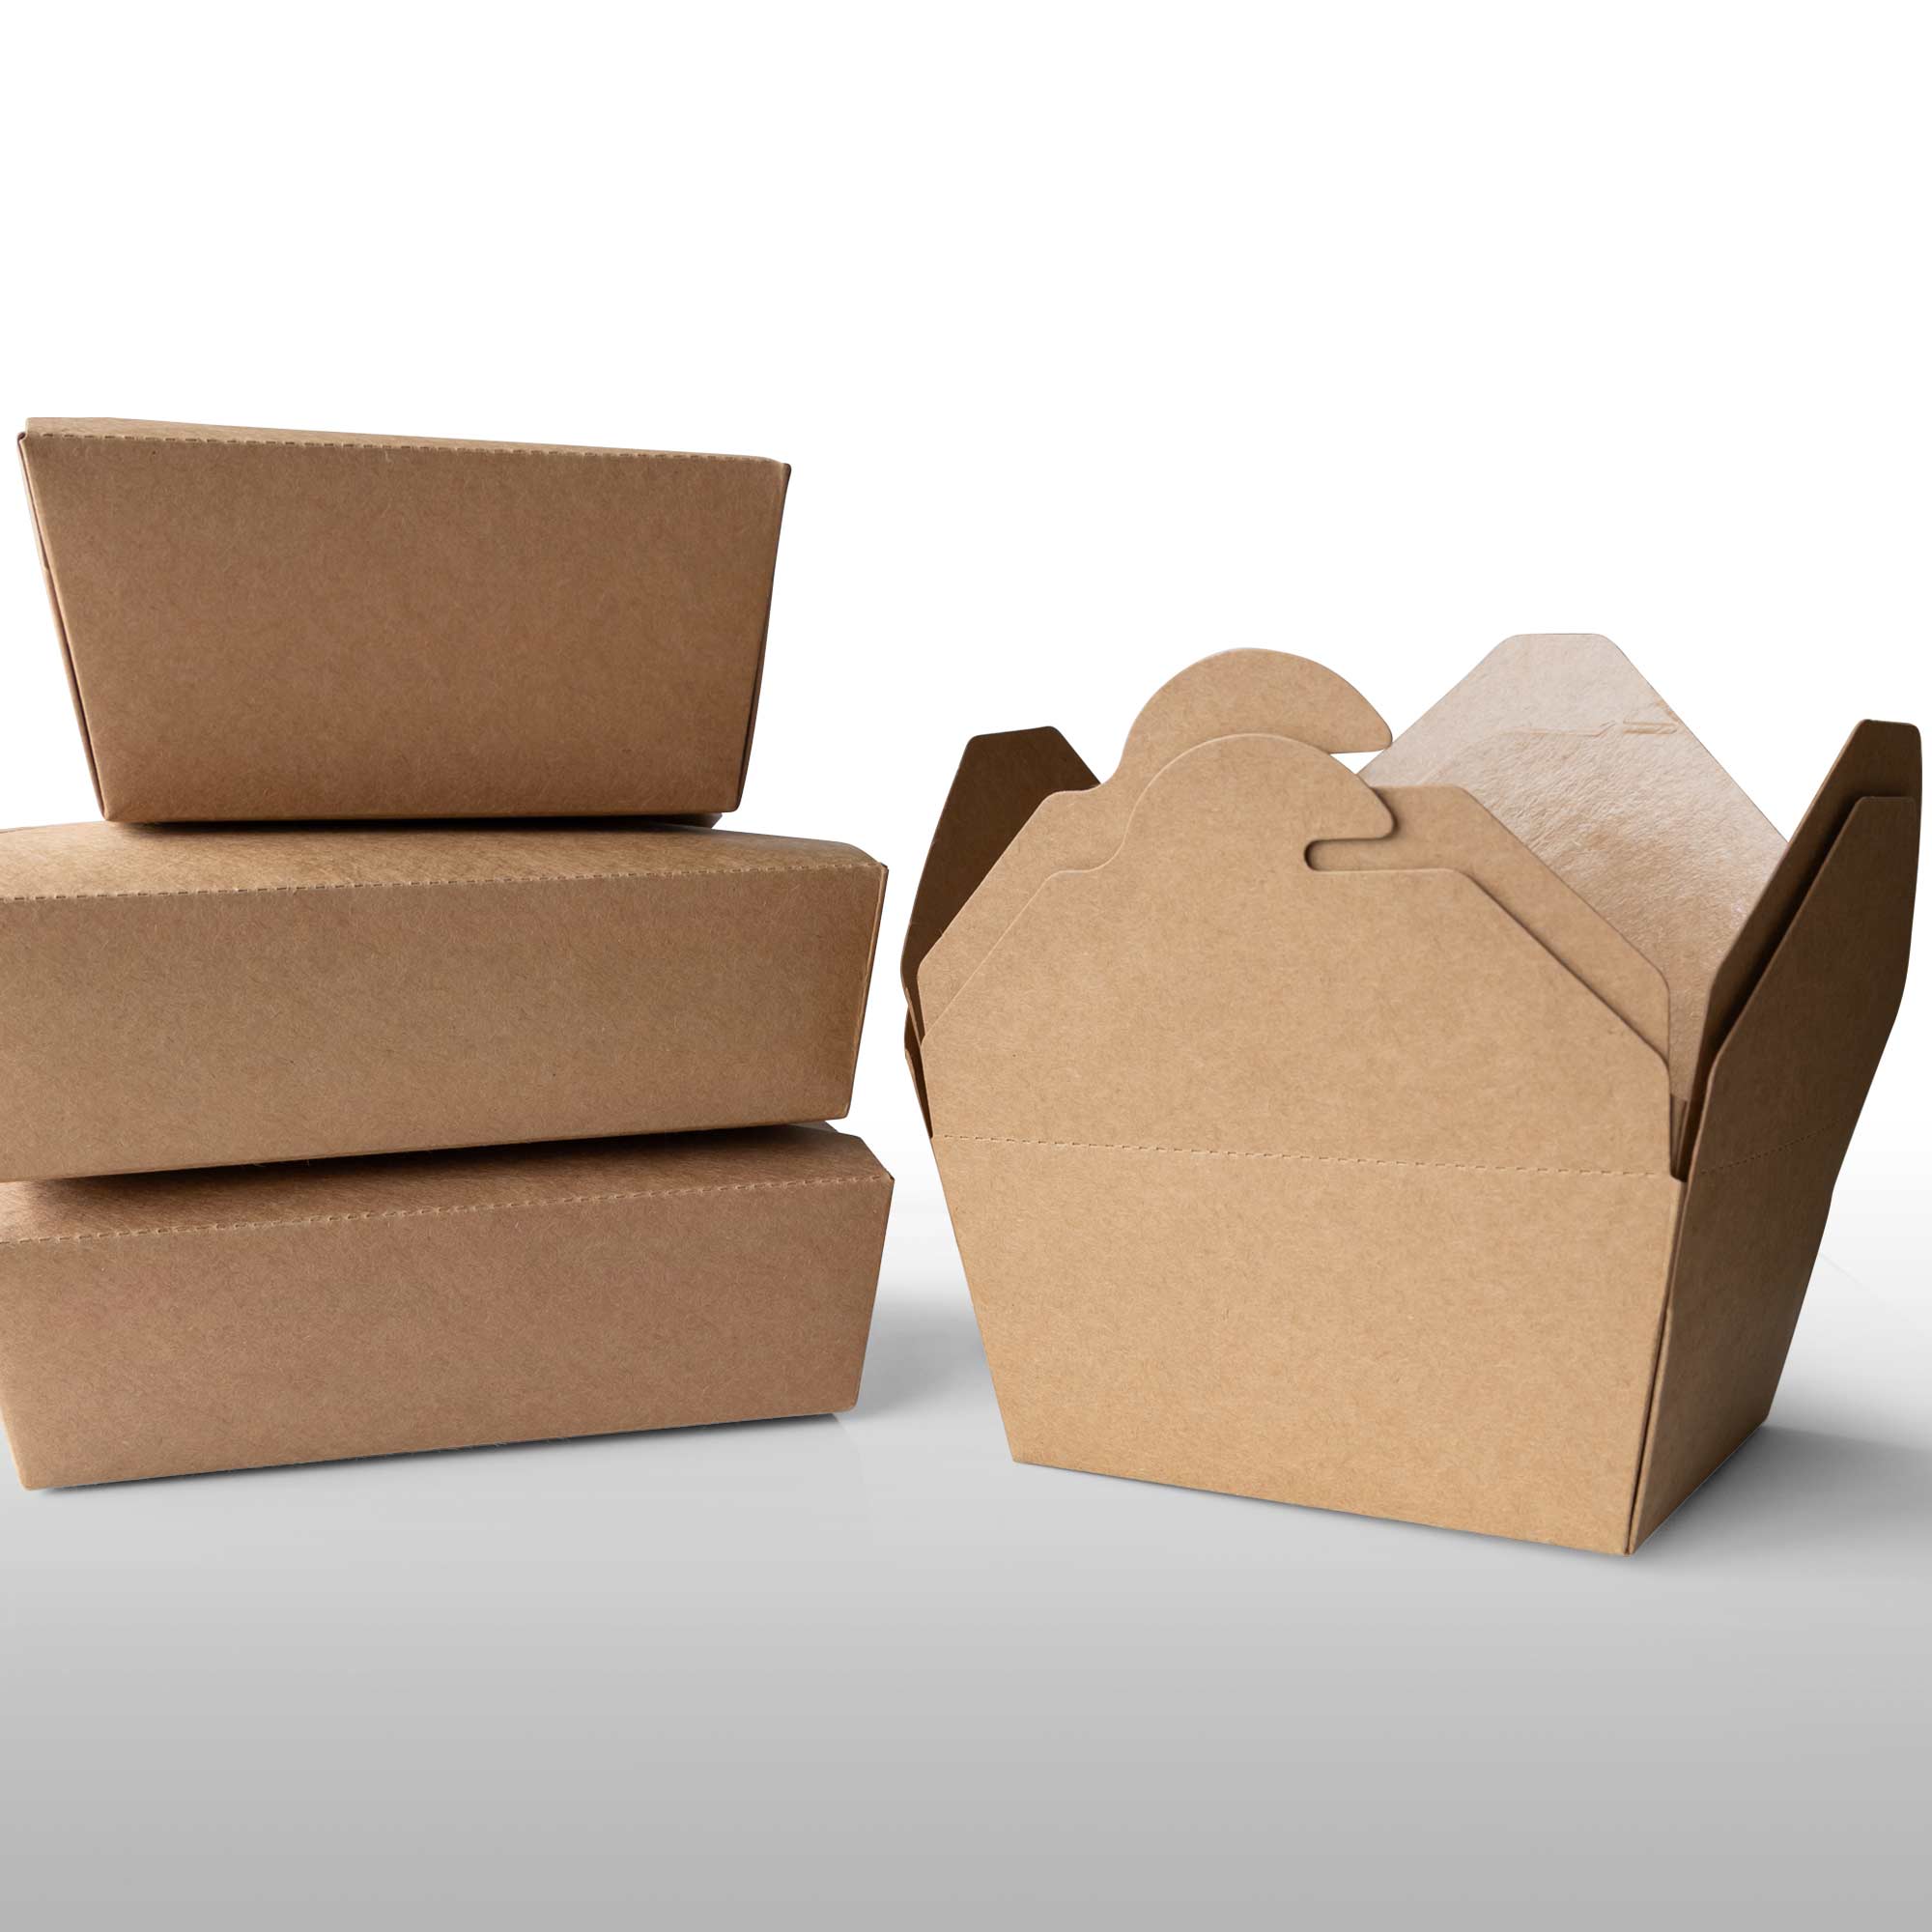 1080ml方形牛皮紙餐盒，適合盛裝韓式炸雞、沙拉等餐點